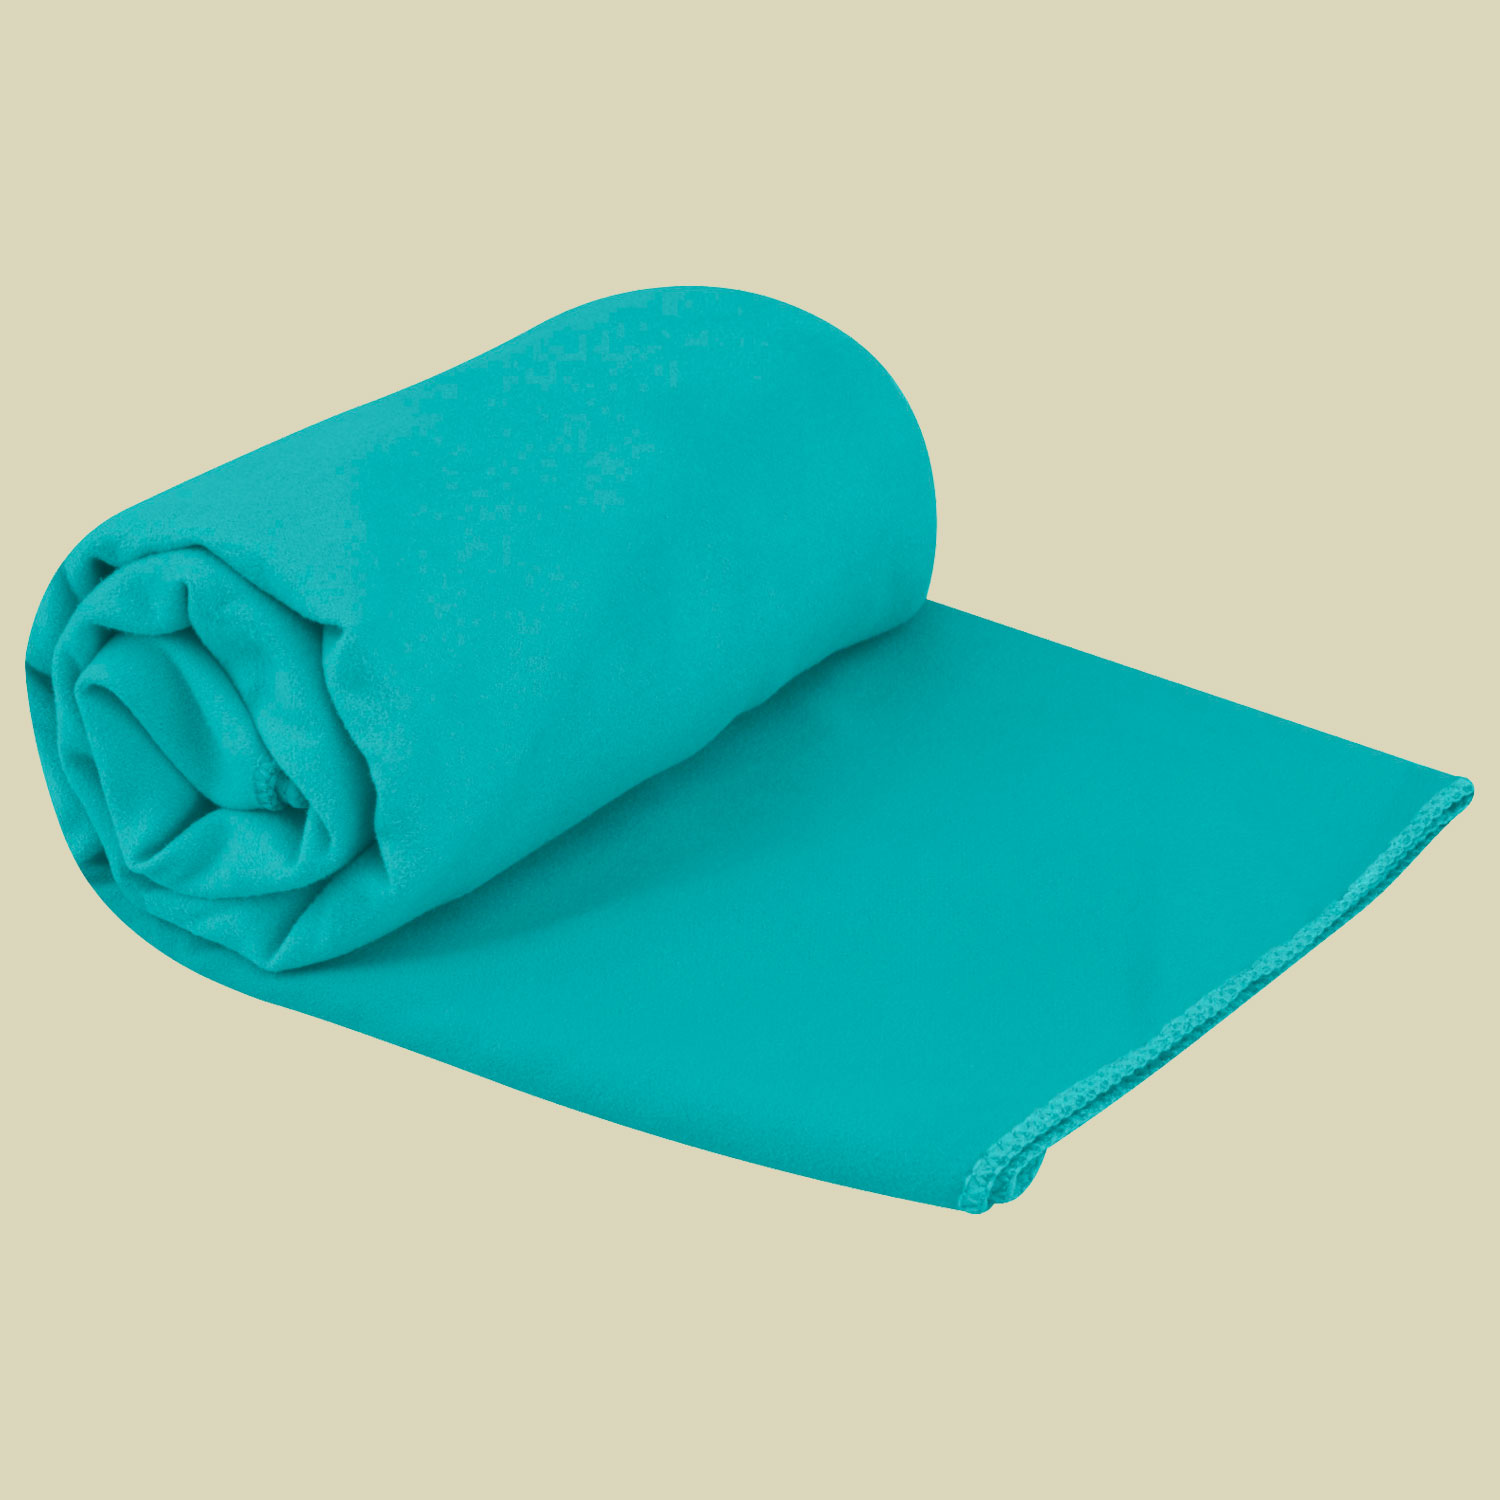 Drylite Towel Größe M Farbe baltic